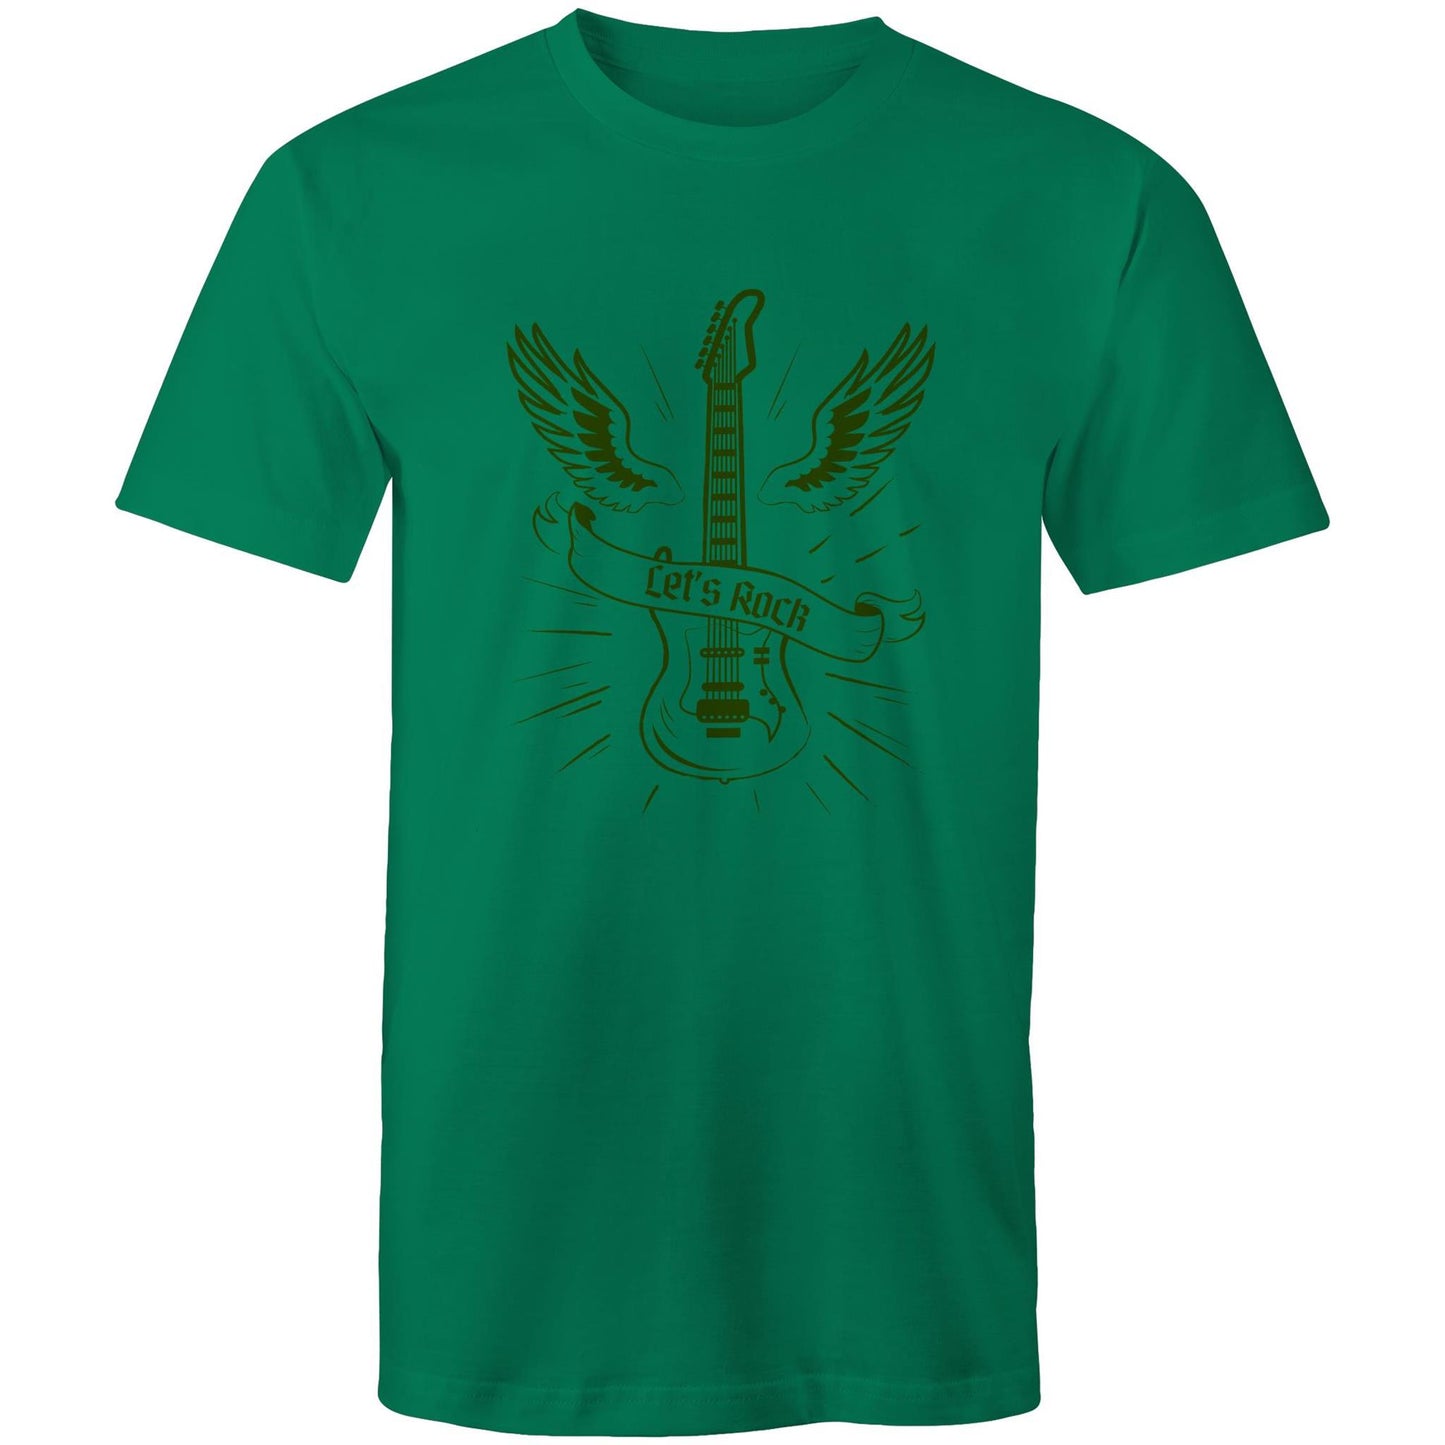 Let's Rock - Mens T-Shirt Kelly Green Mens T-shirt Music